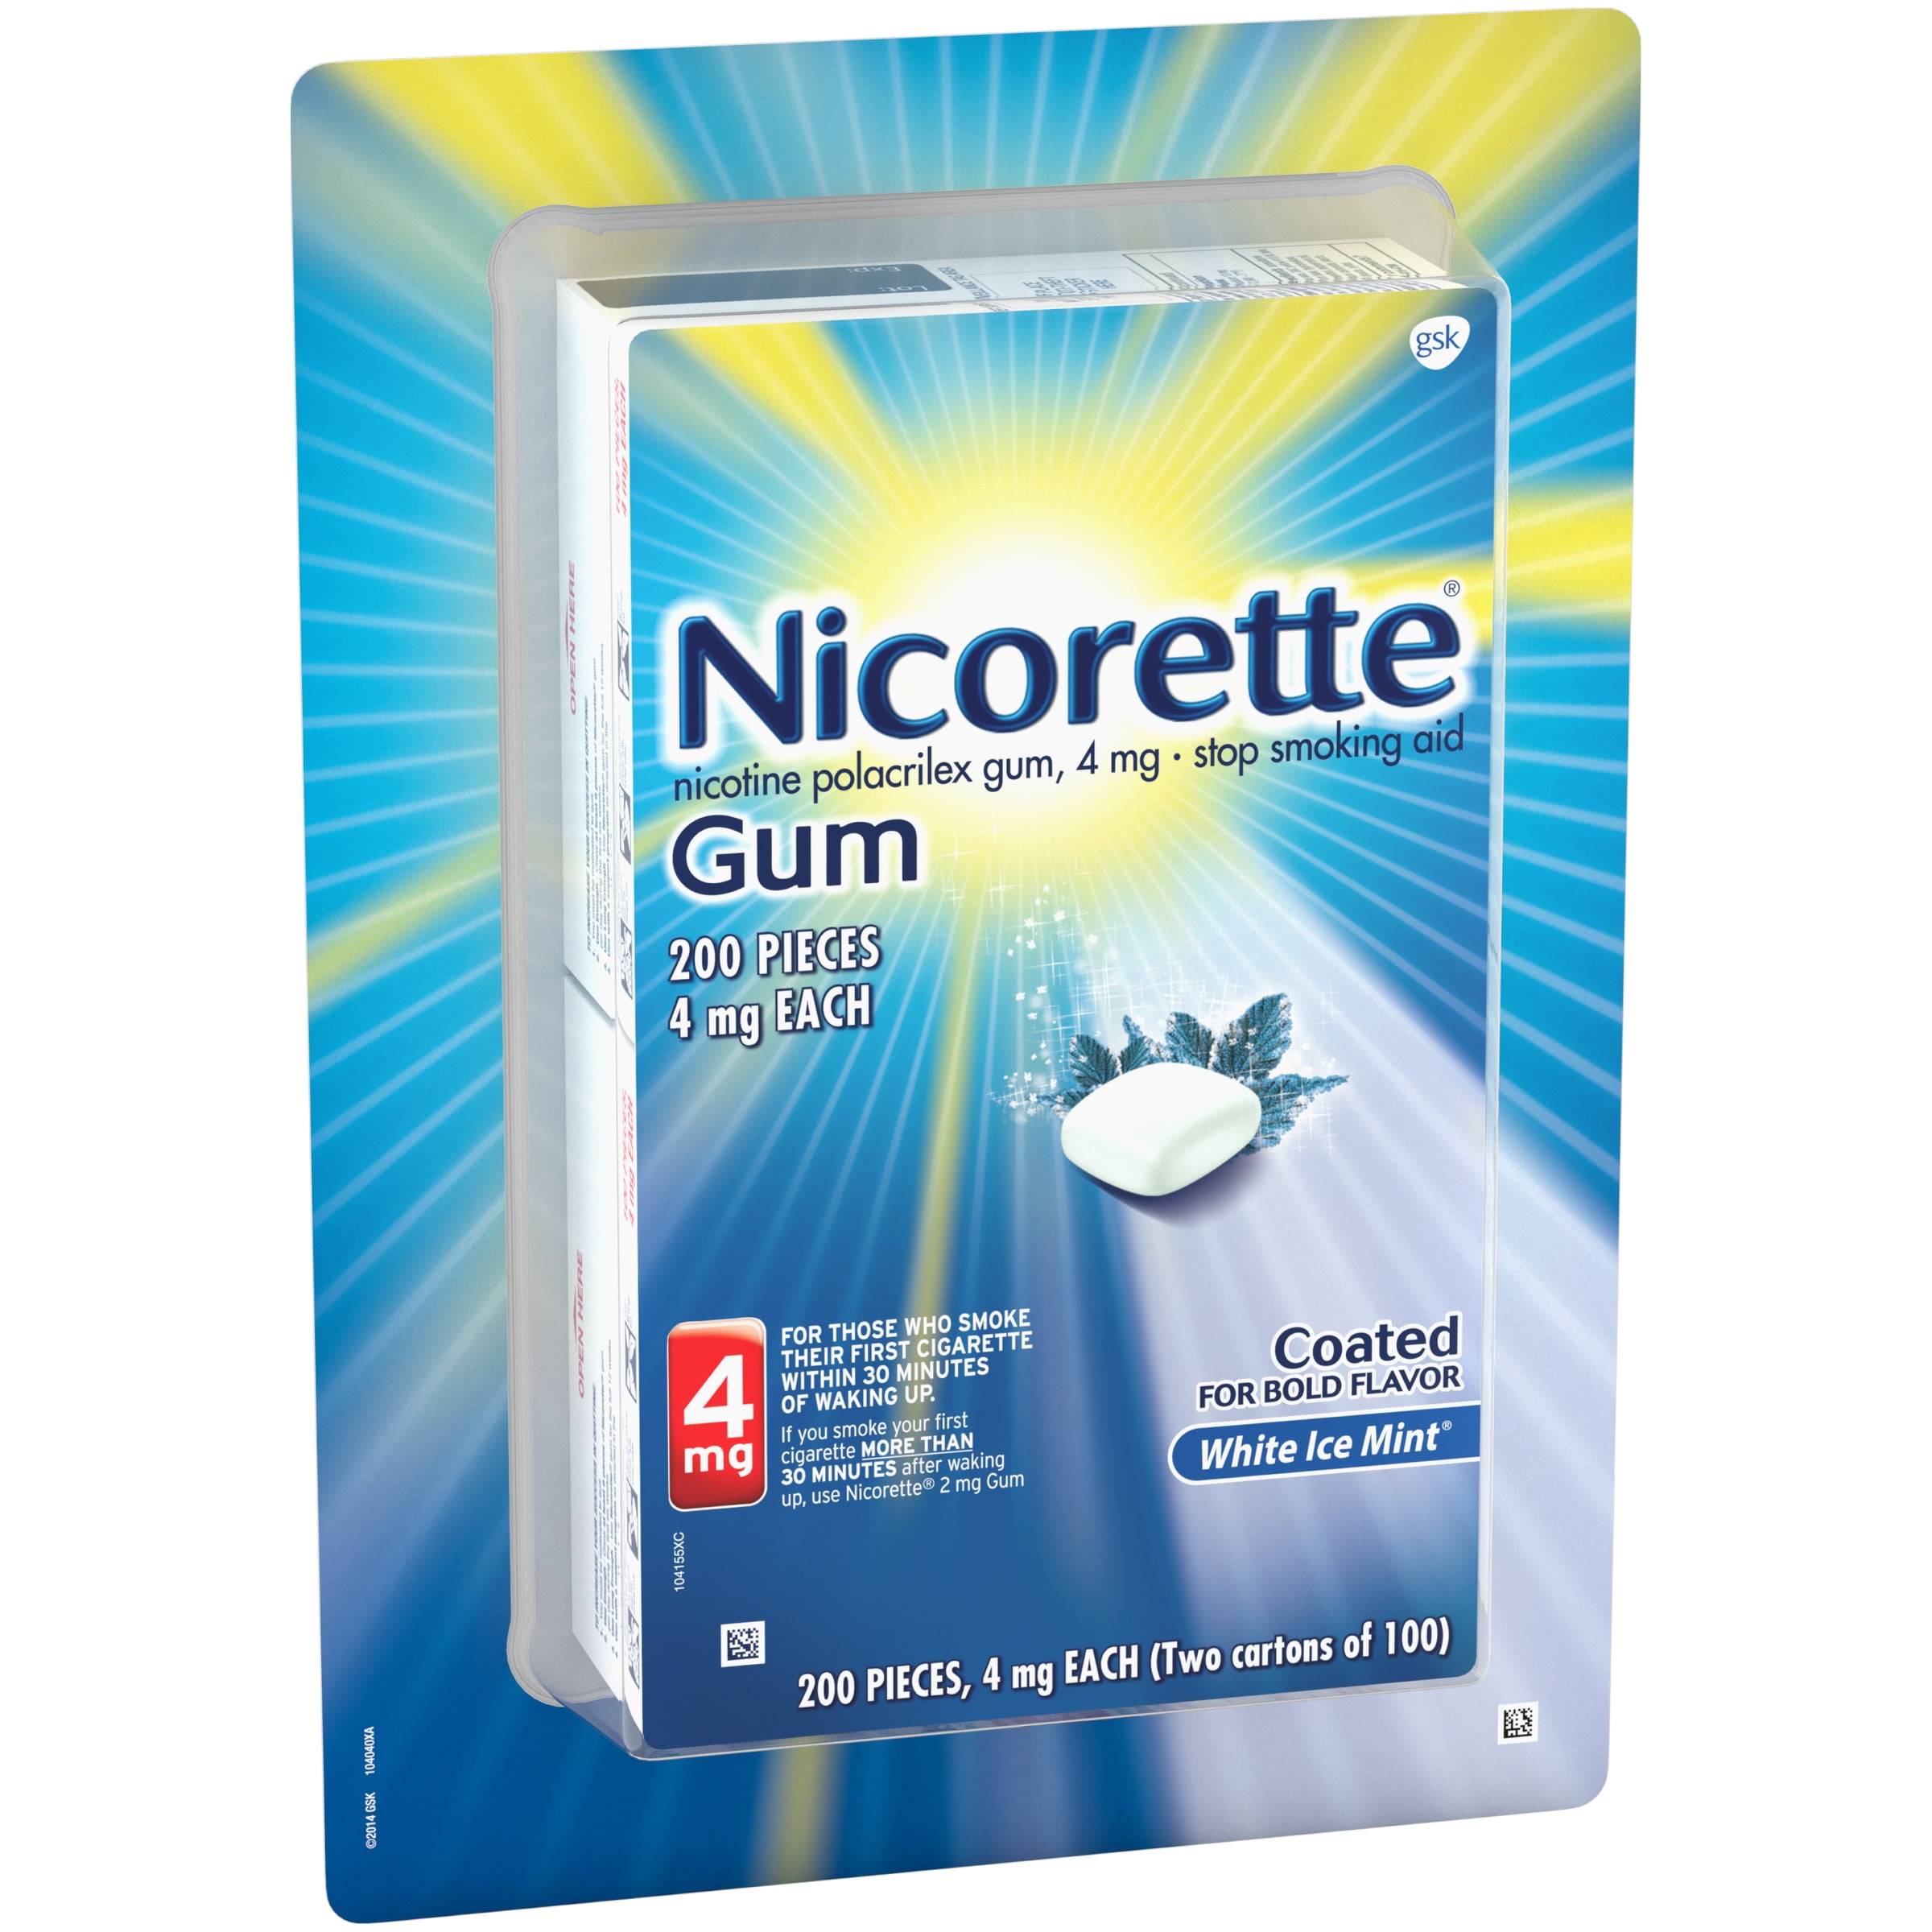 nicorette-white-ice-mint-4mg-stop-smoking-aid-gum-200-ct-pack